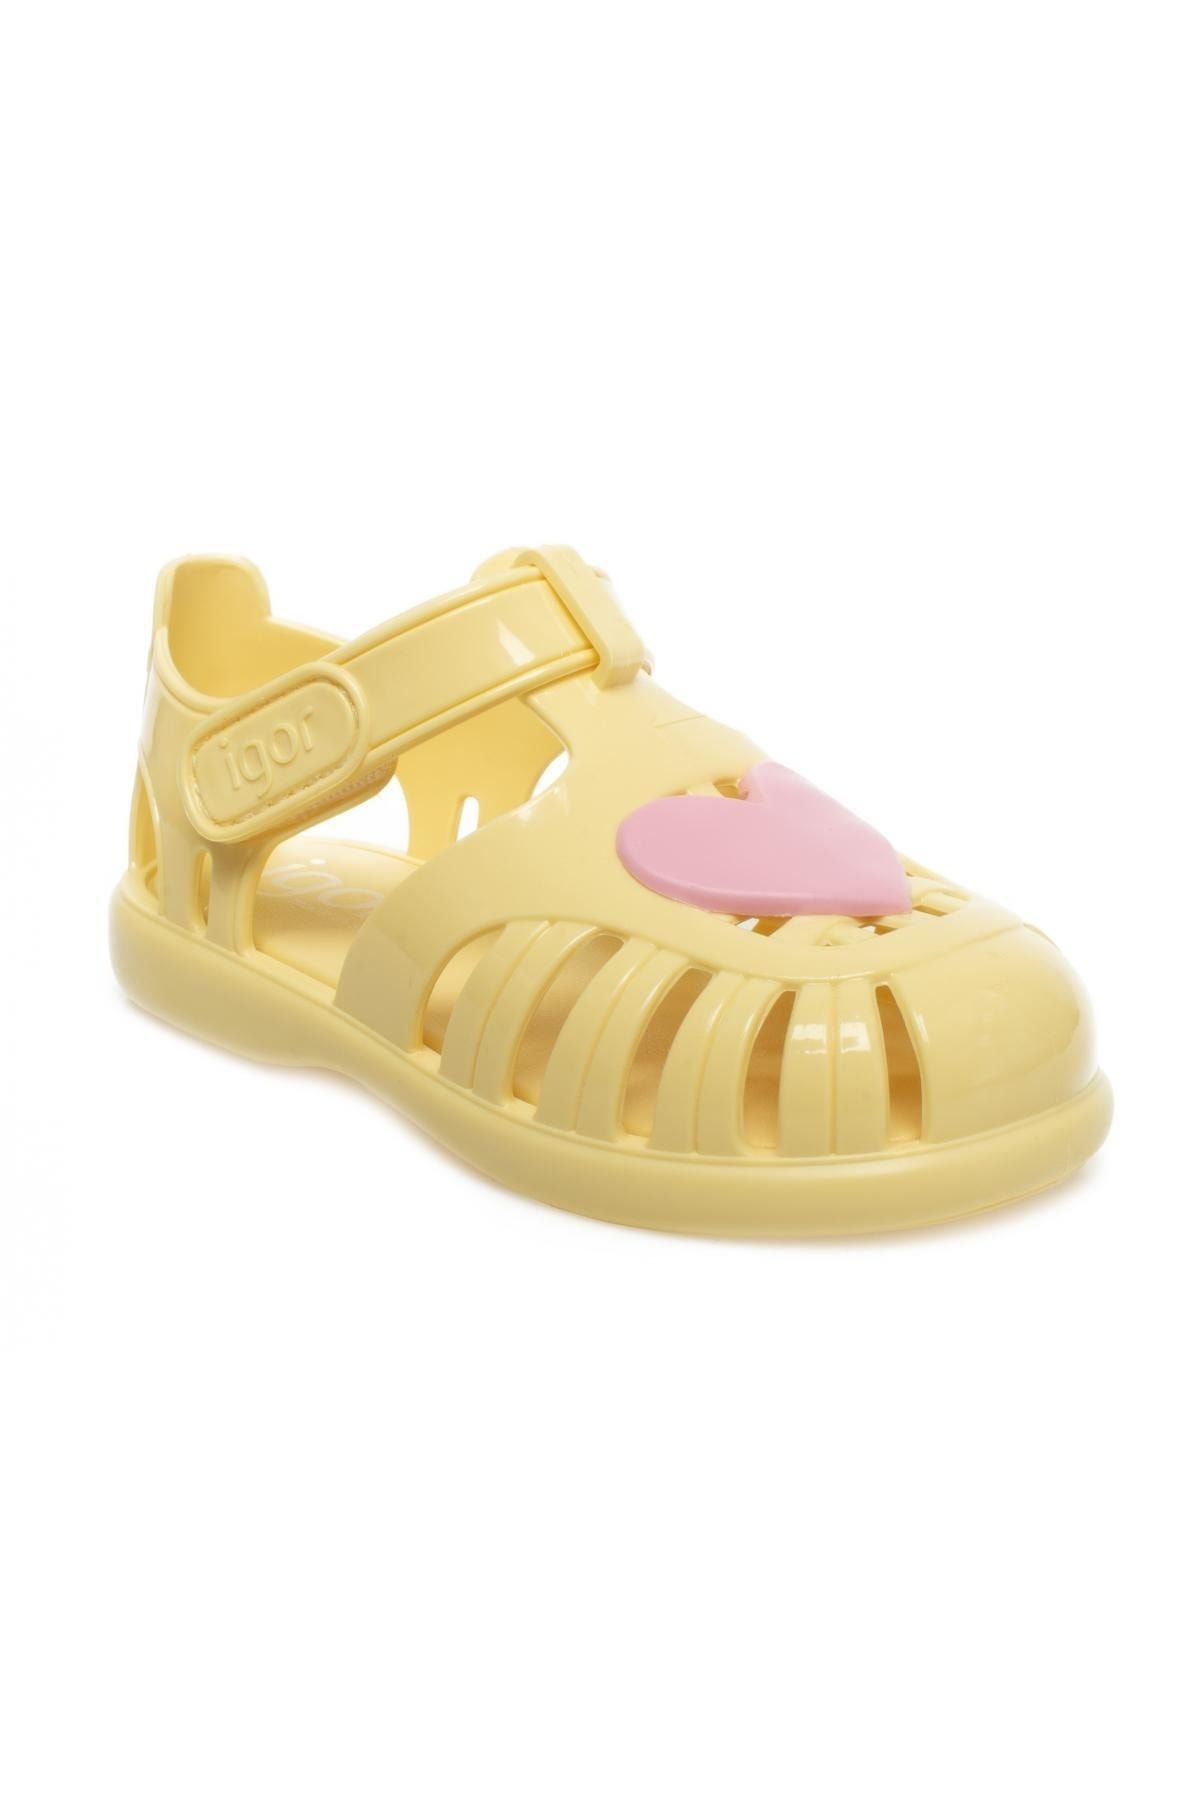 IGOR S10310 Tobby Gloss Love Sarı Çocuk Sandalet